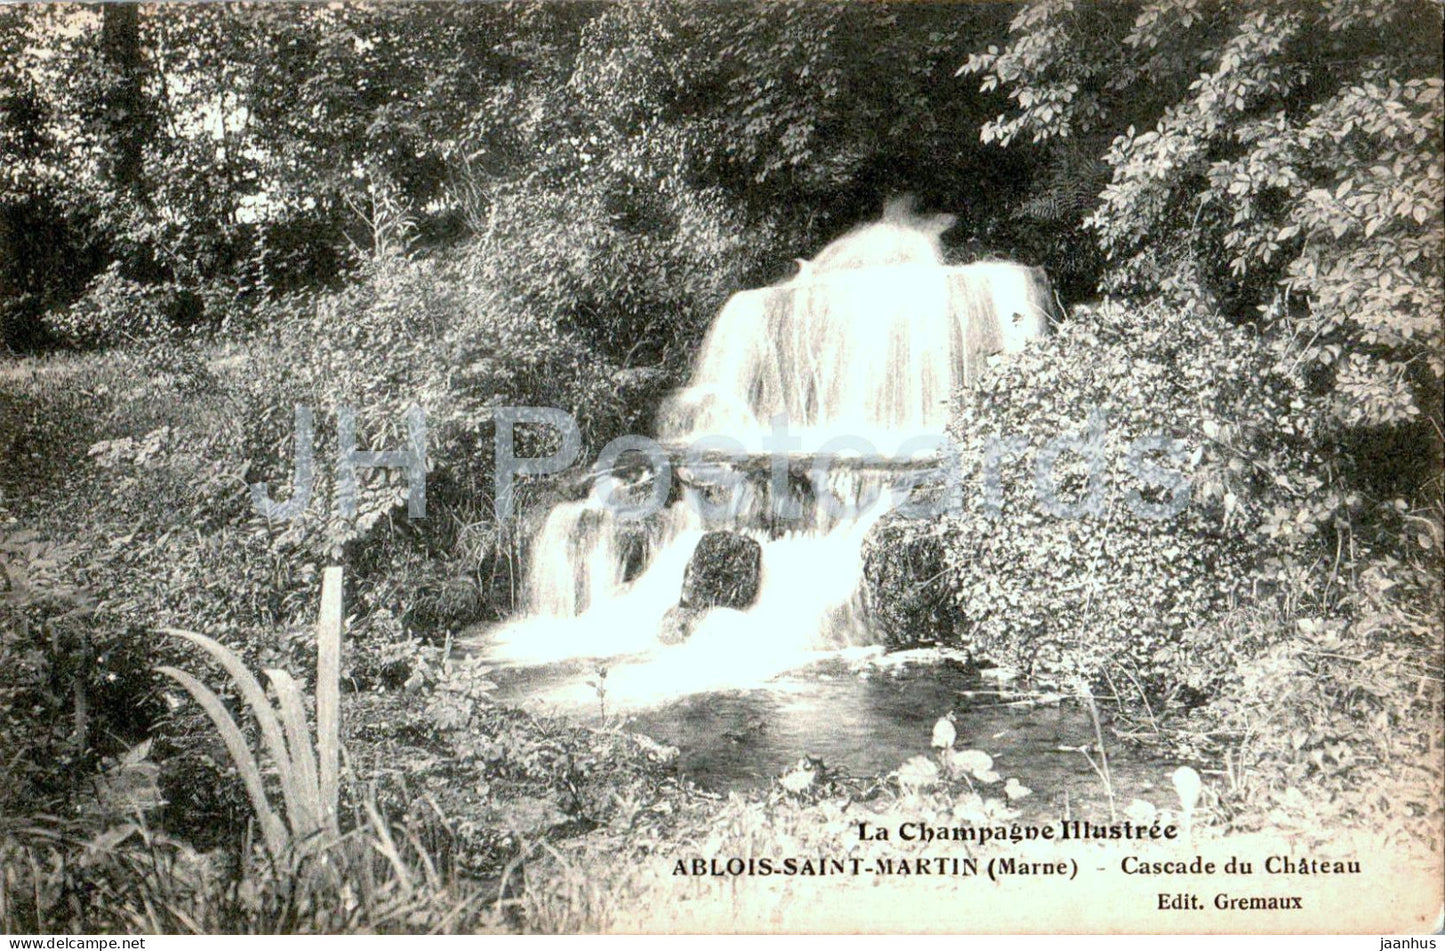 Ablois Saint Martin - Cascade du Chateau - old postcard - 1915 - France - used - JH Postcards